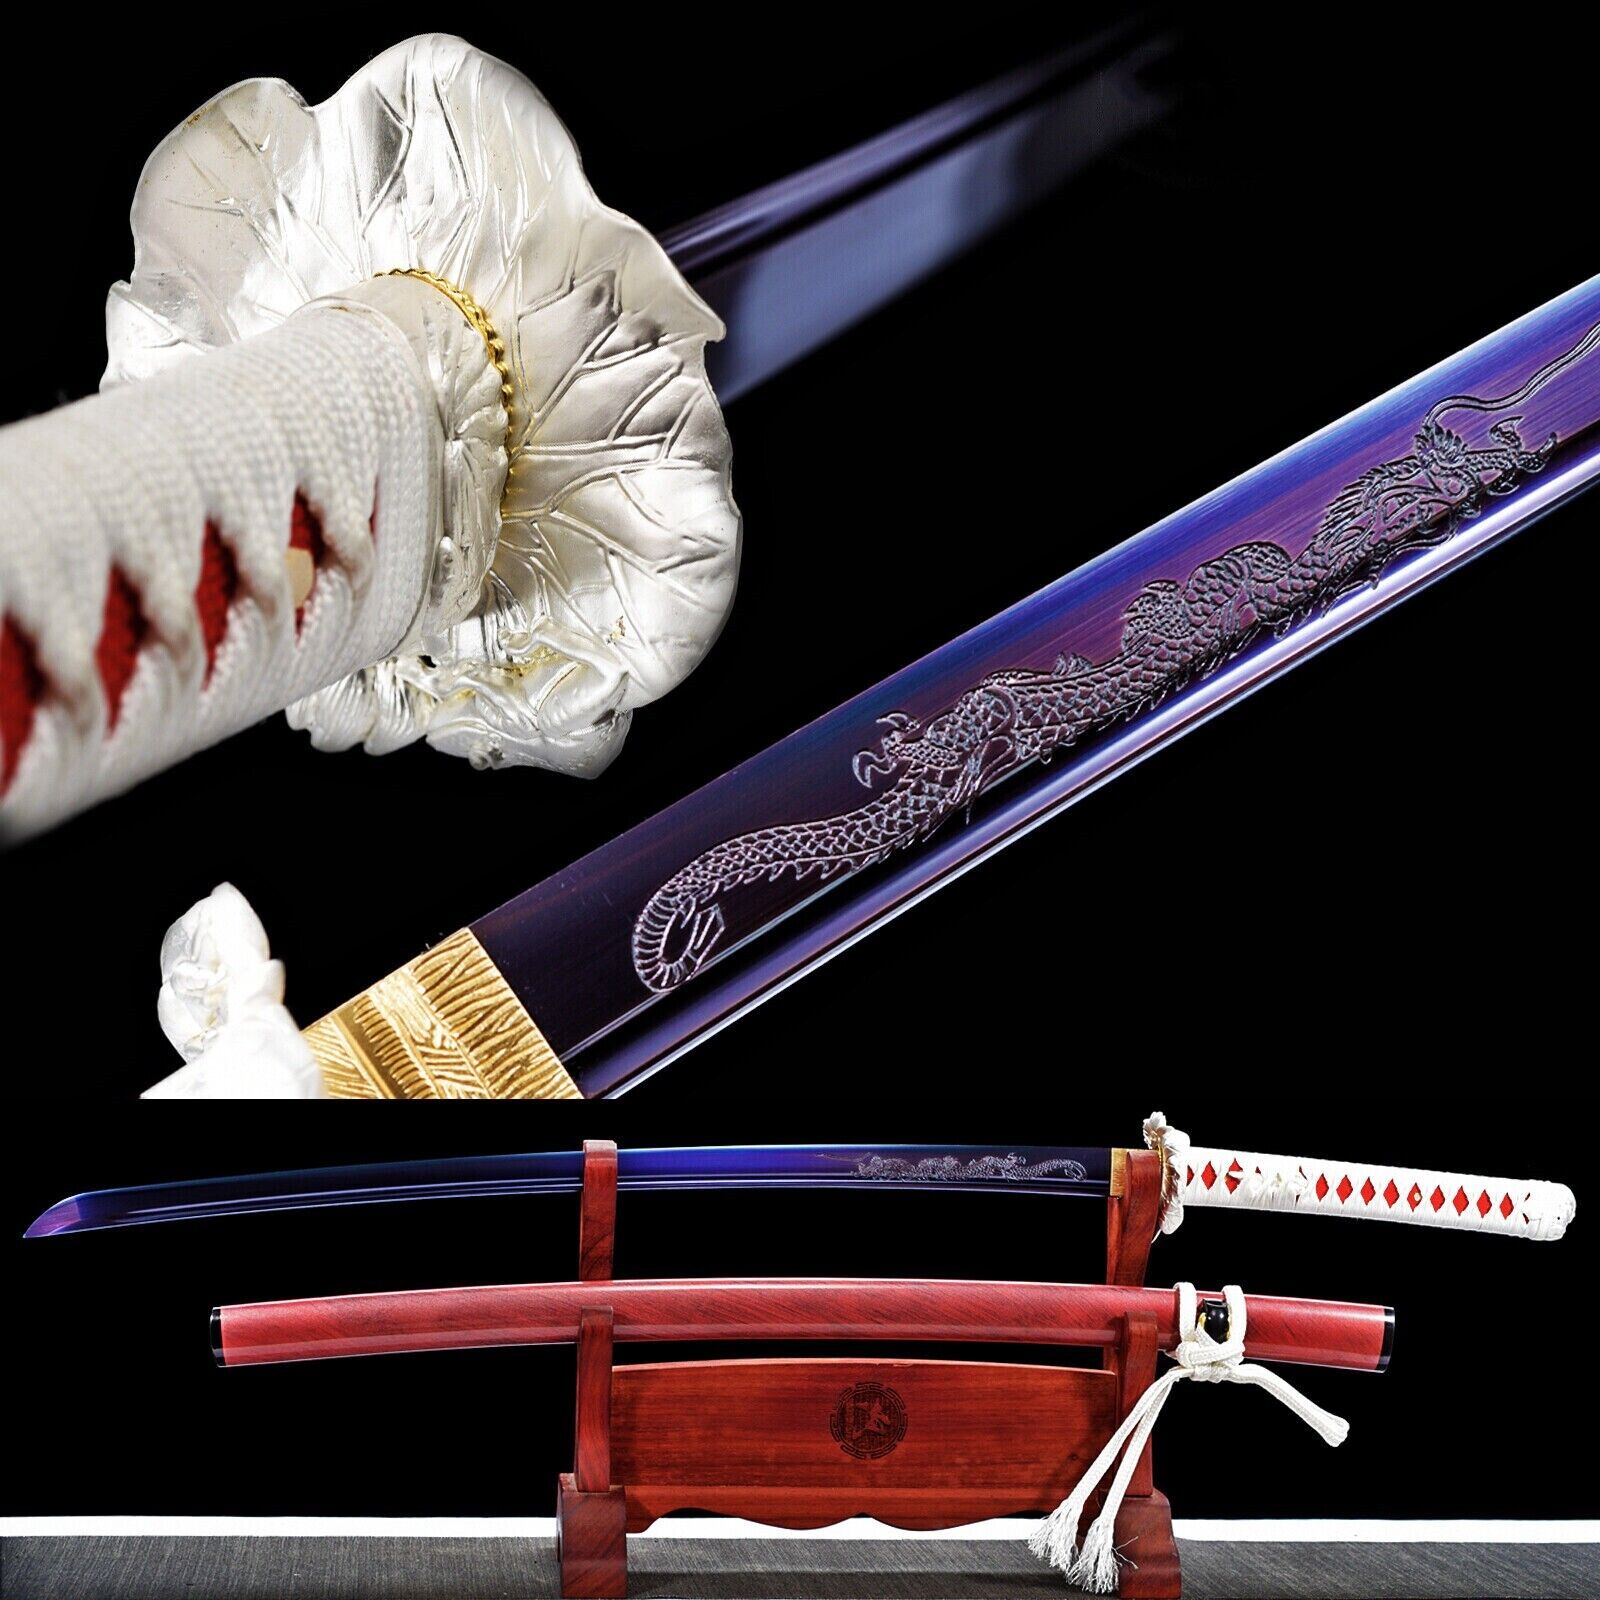 Elegant Red Katana 1095Carbon Steel Japanese Samurai Functional Sharp Lady Sword